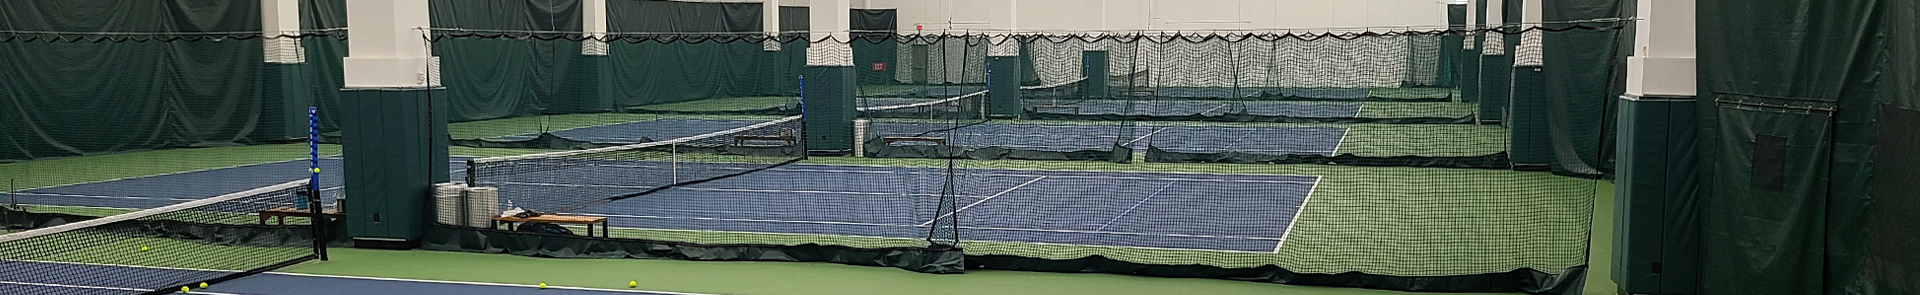 Indoor Tennis Courts Divider Netting